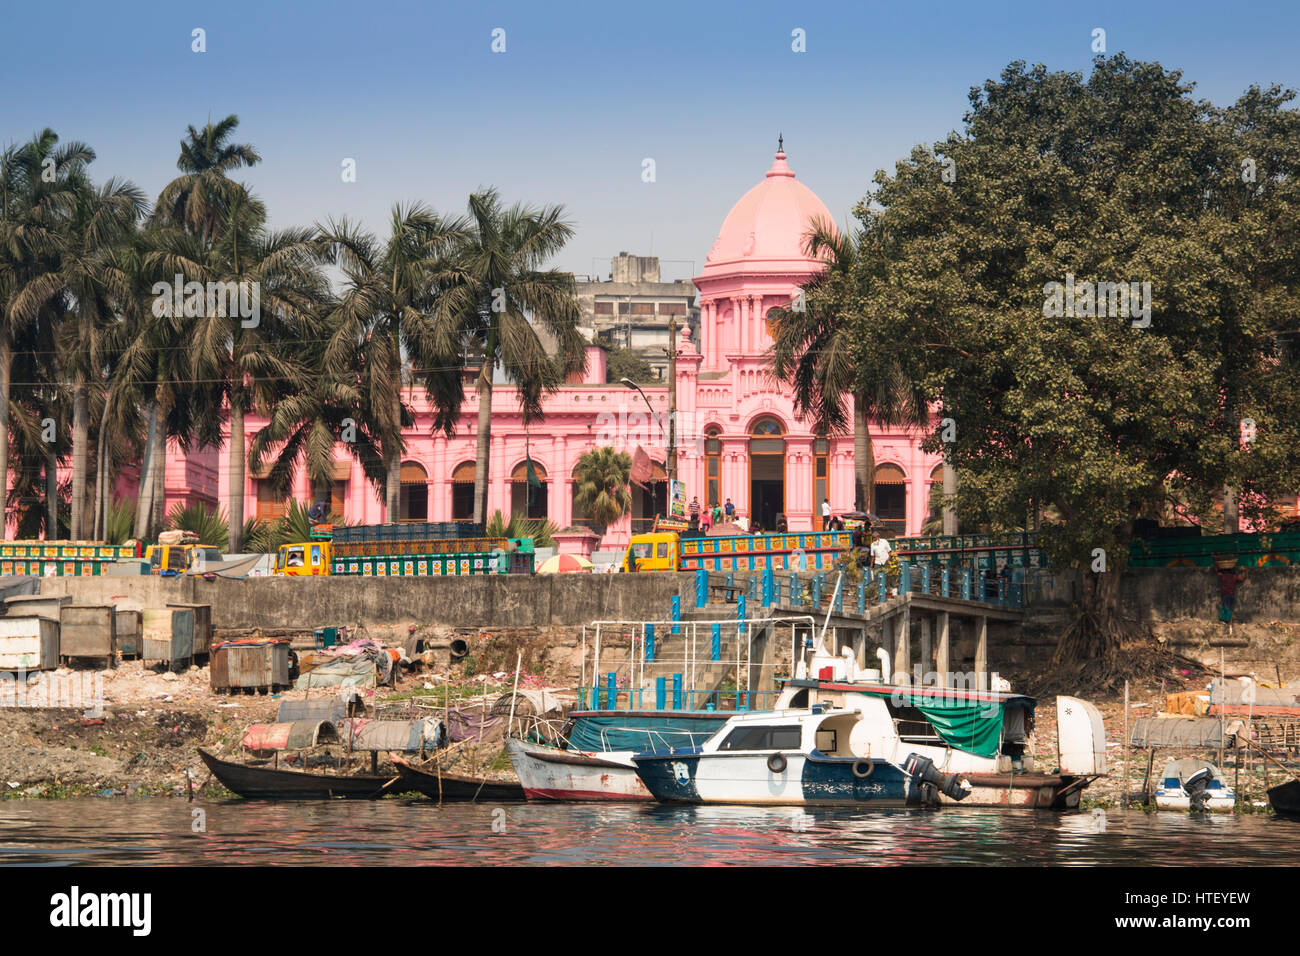 DHAKA, BANGLADESH - FEBRUARY 2017: The pink palace of Ashan Manjil seen from the river in Sadarghat, the old center of Dhaka in Bangladesh Stock Photo